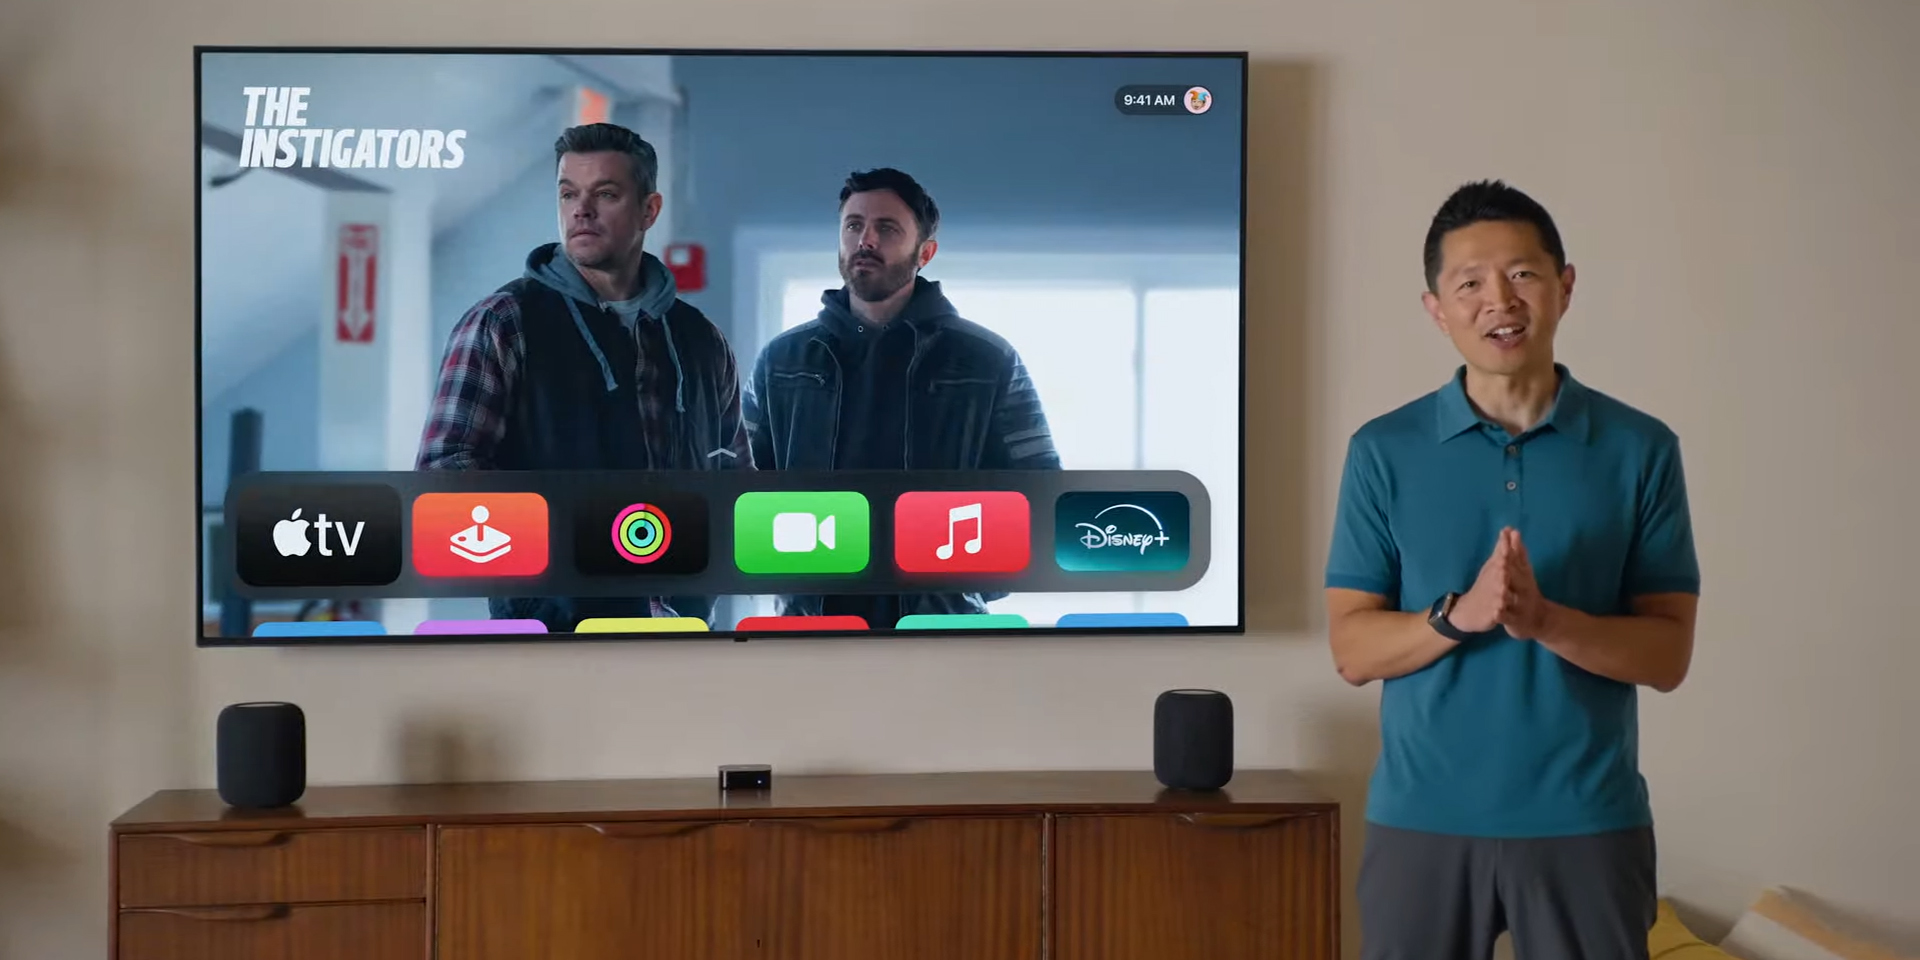 Apple анонсировала новые возможности AirPods Pro и Apple TV